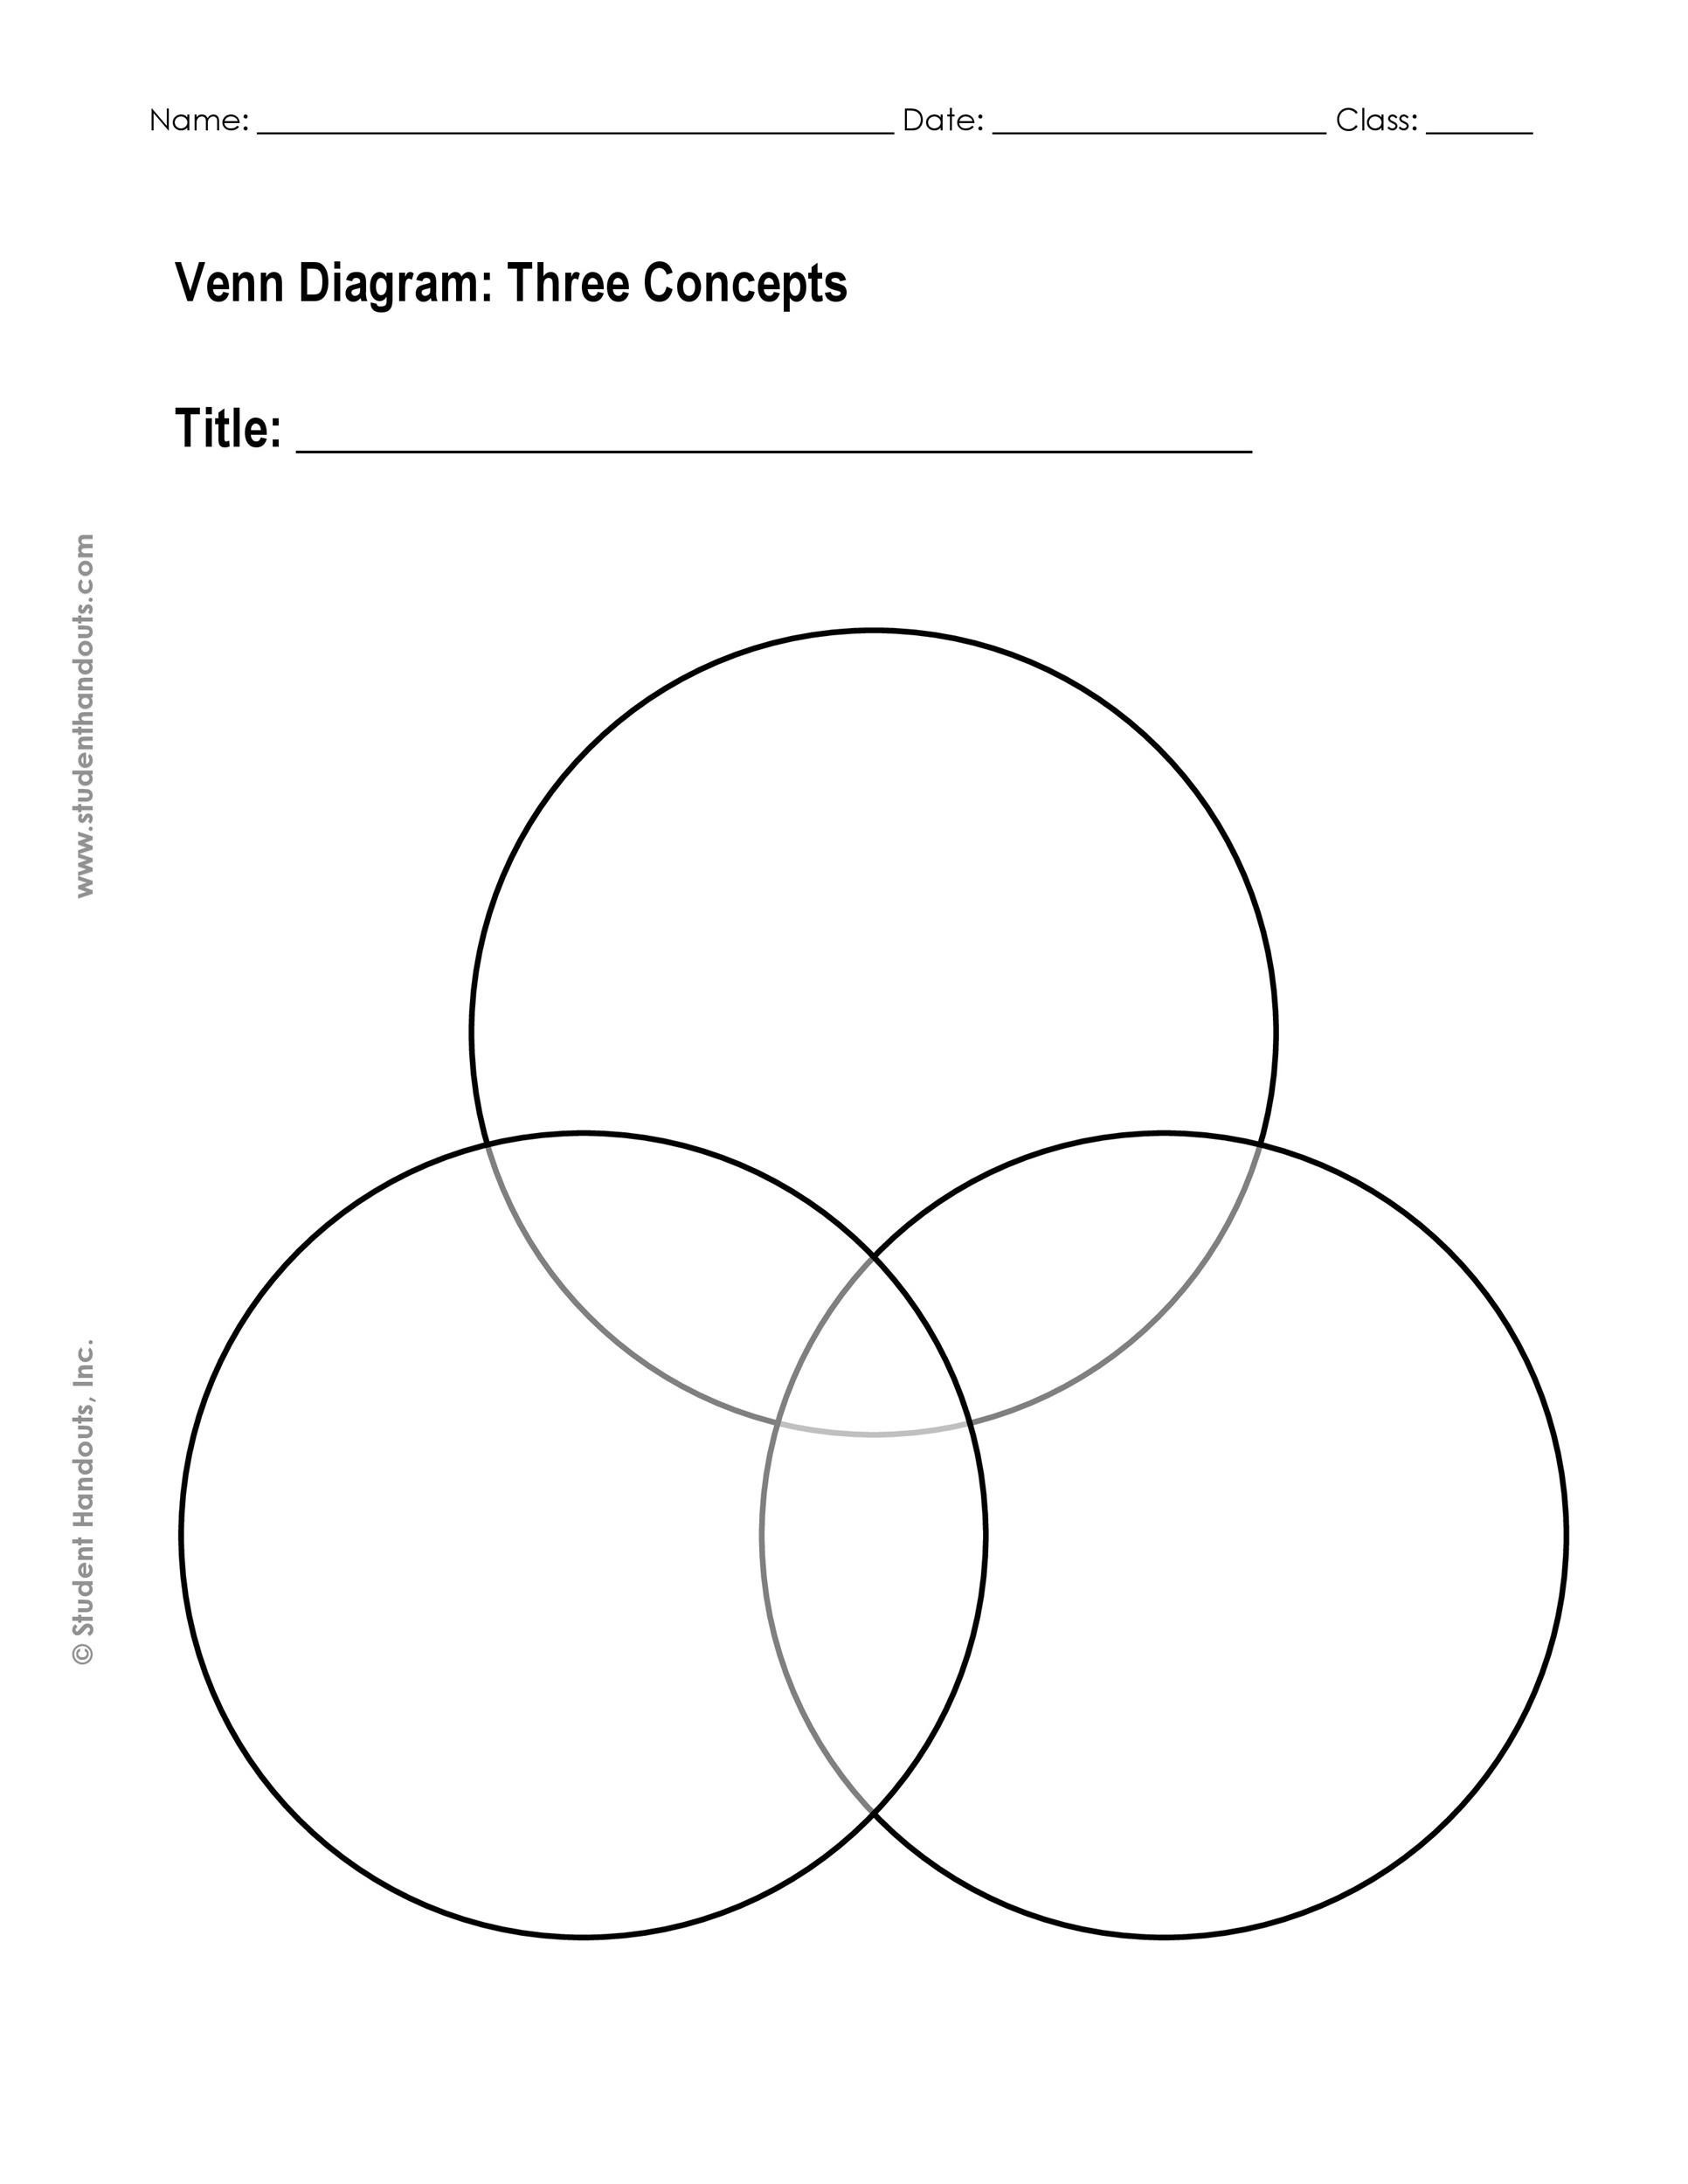 venn-diagram-printable-free